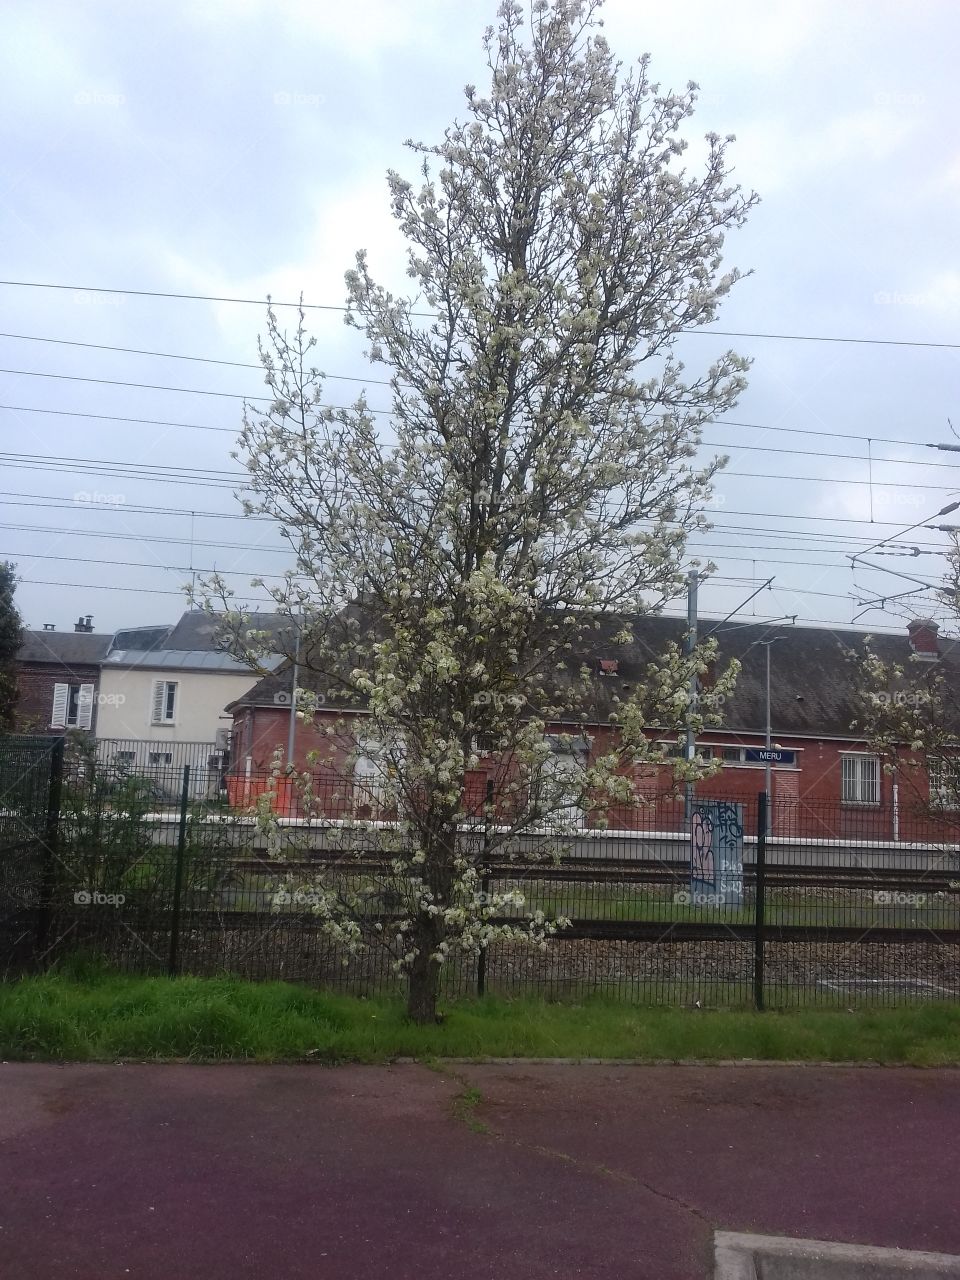 tree full of flowers on spring